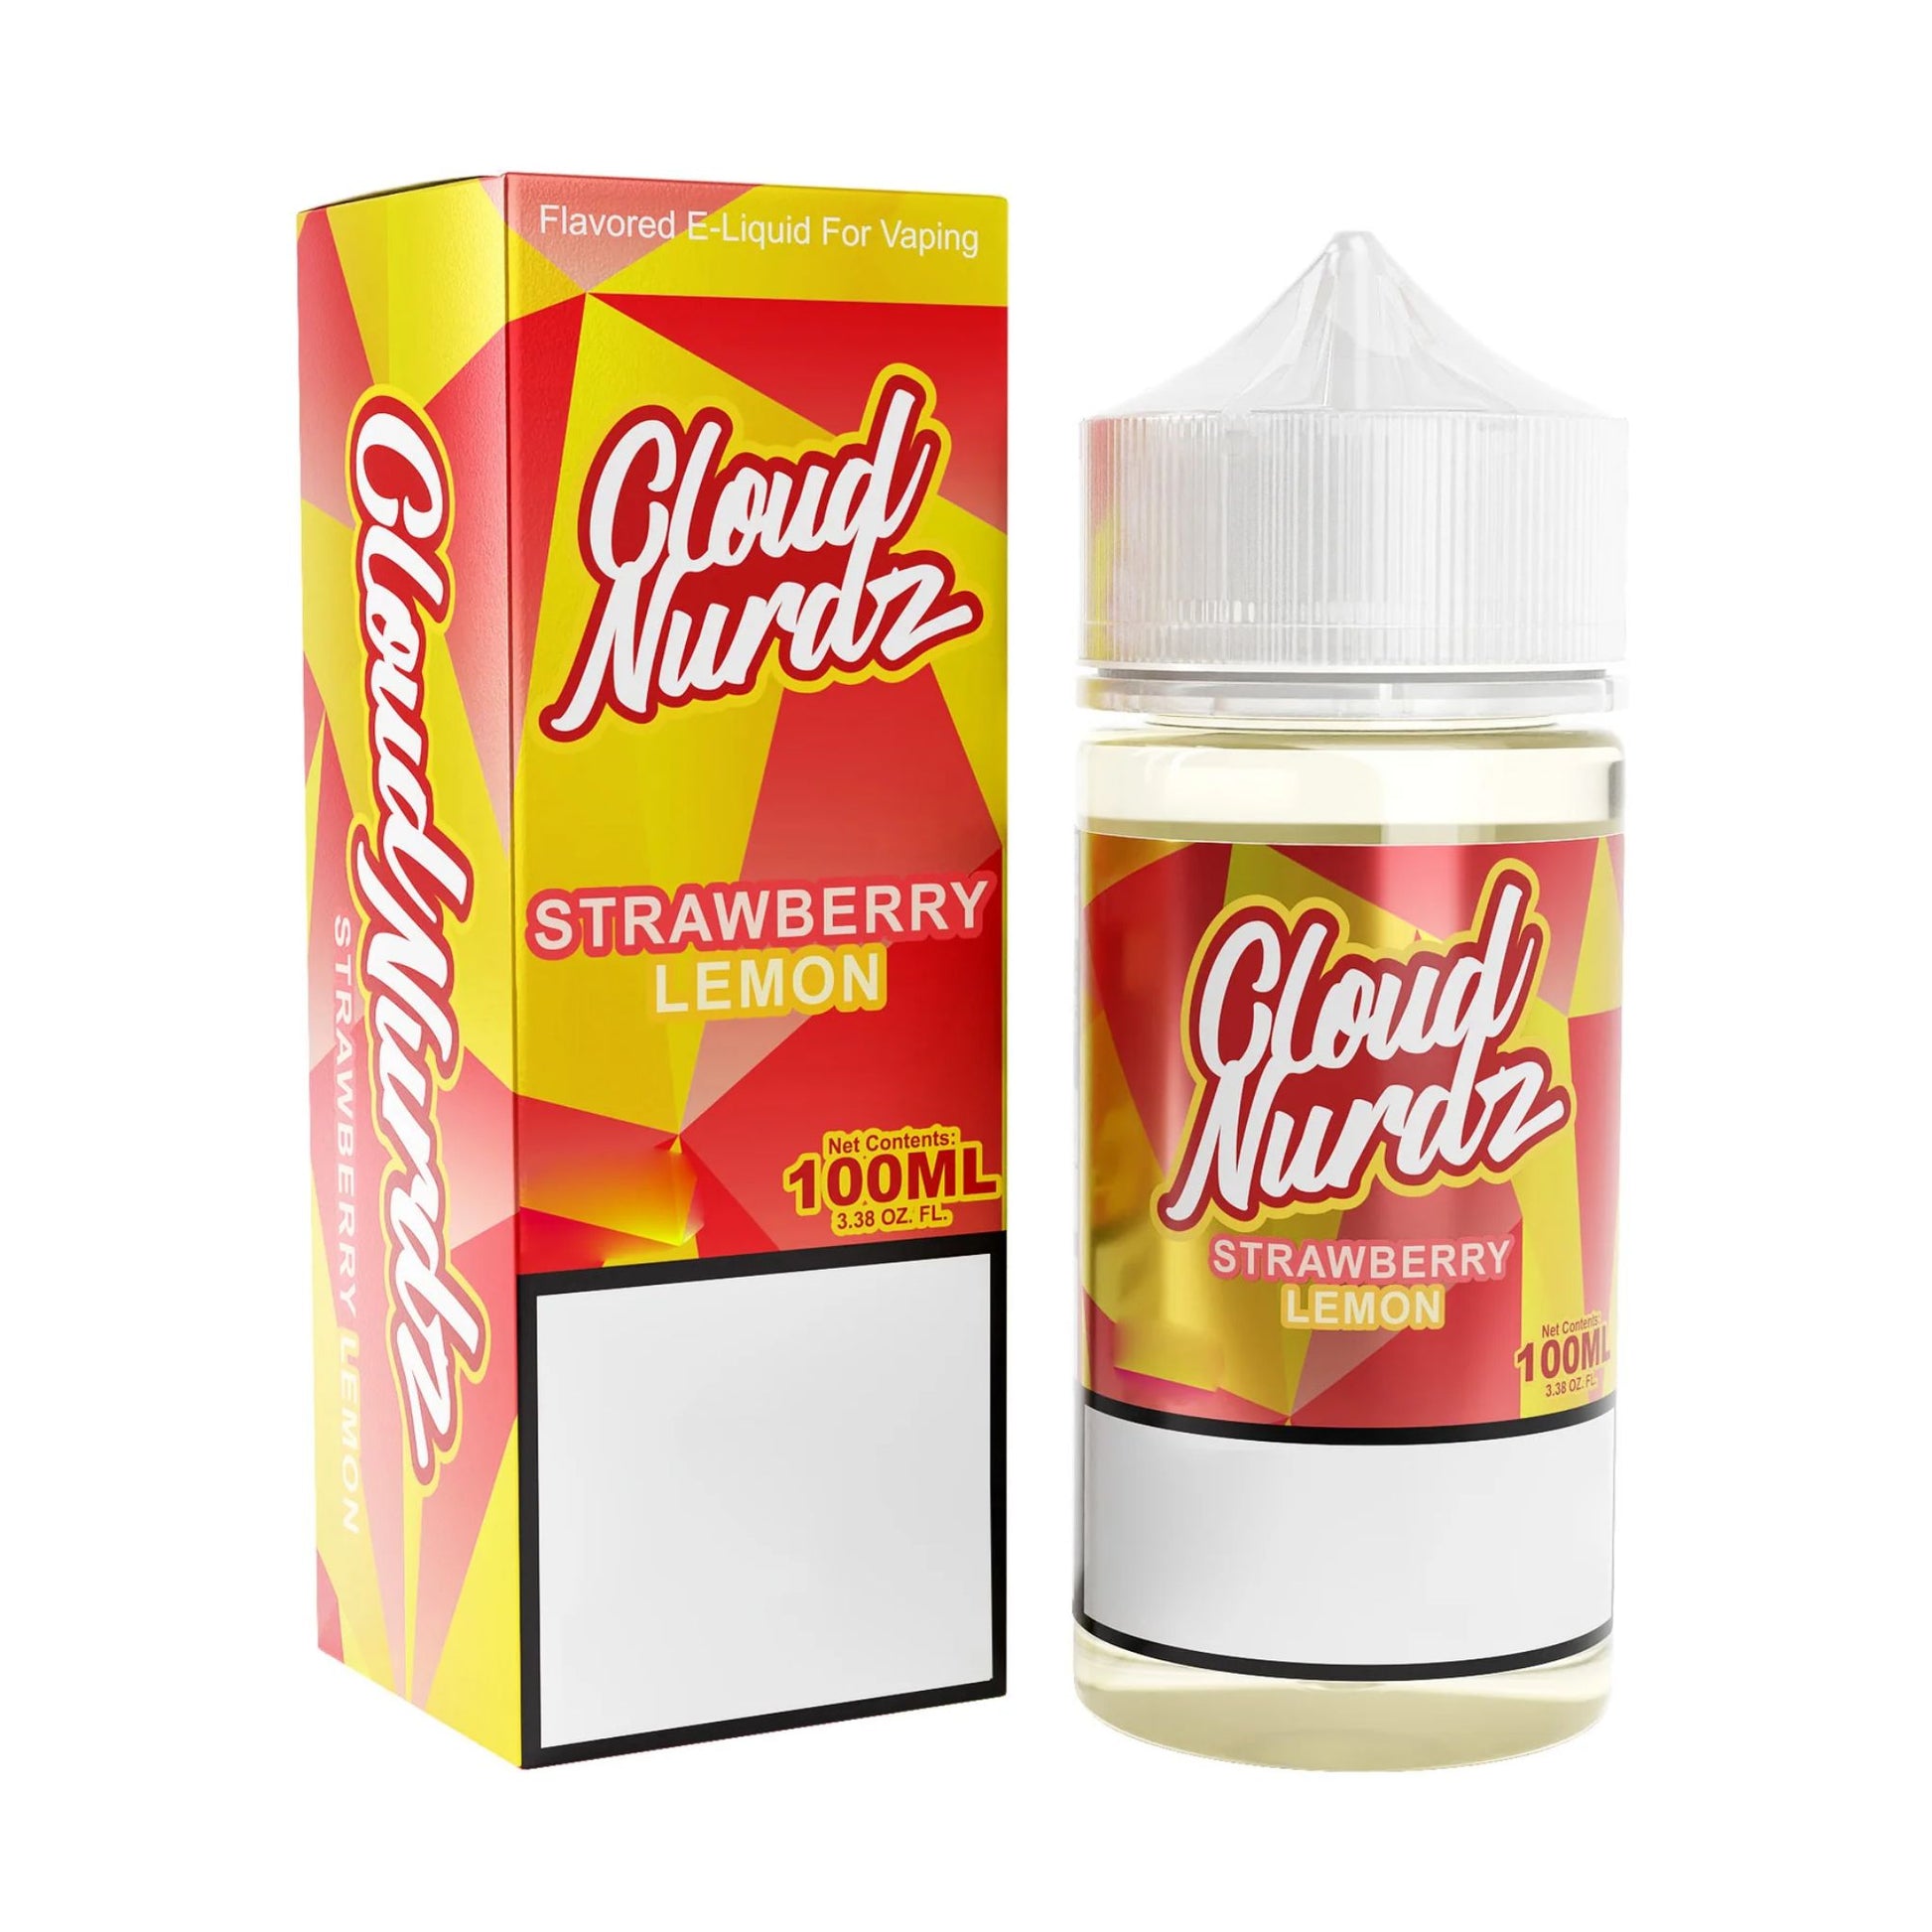 Cloud Nurdz | Strawberry Lemon | 100ml bottle and box